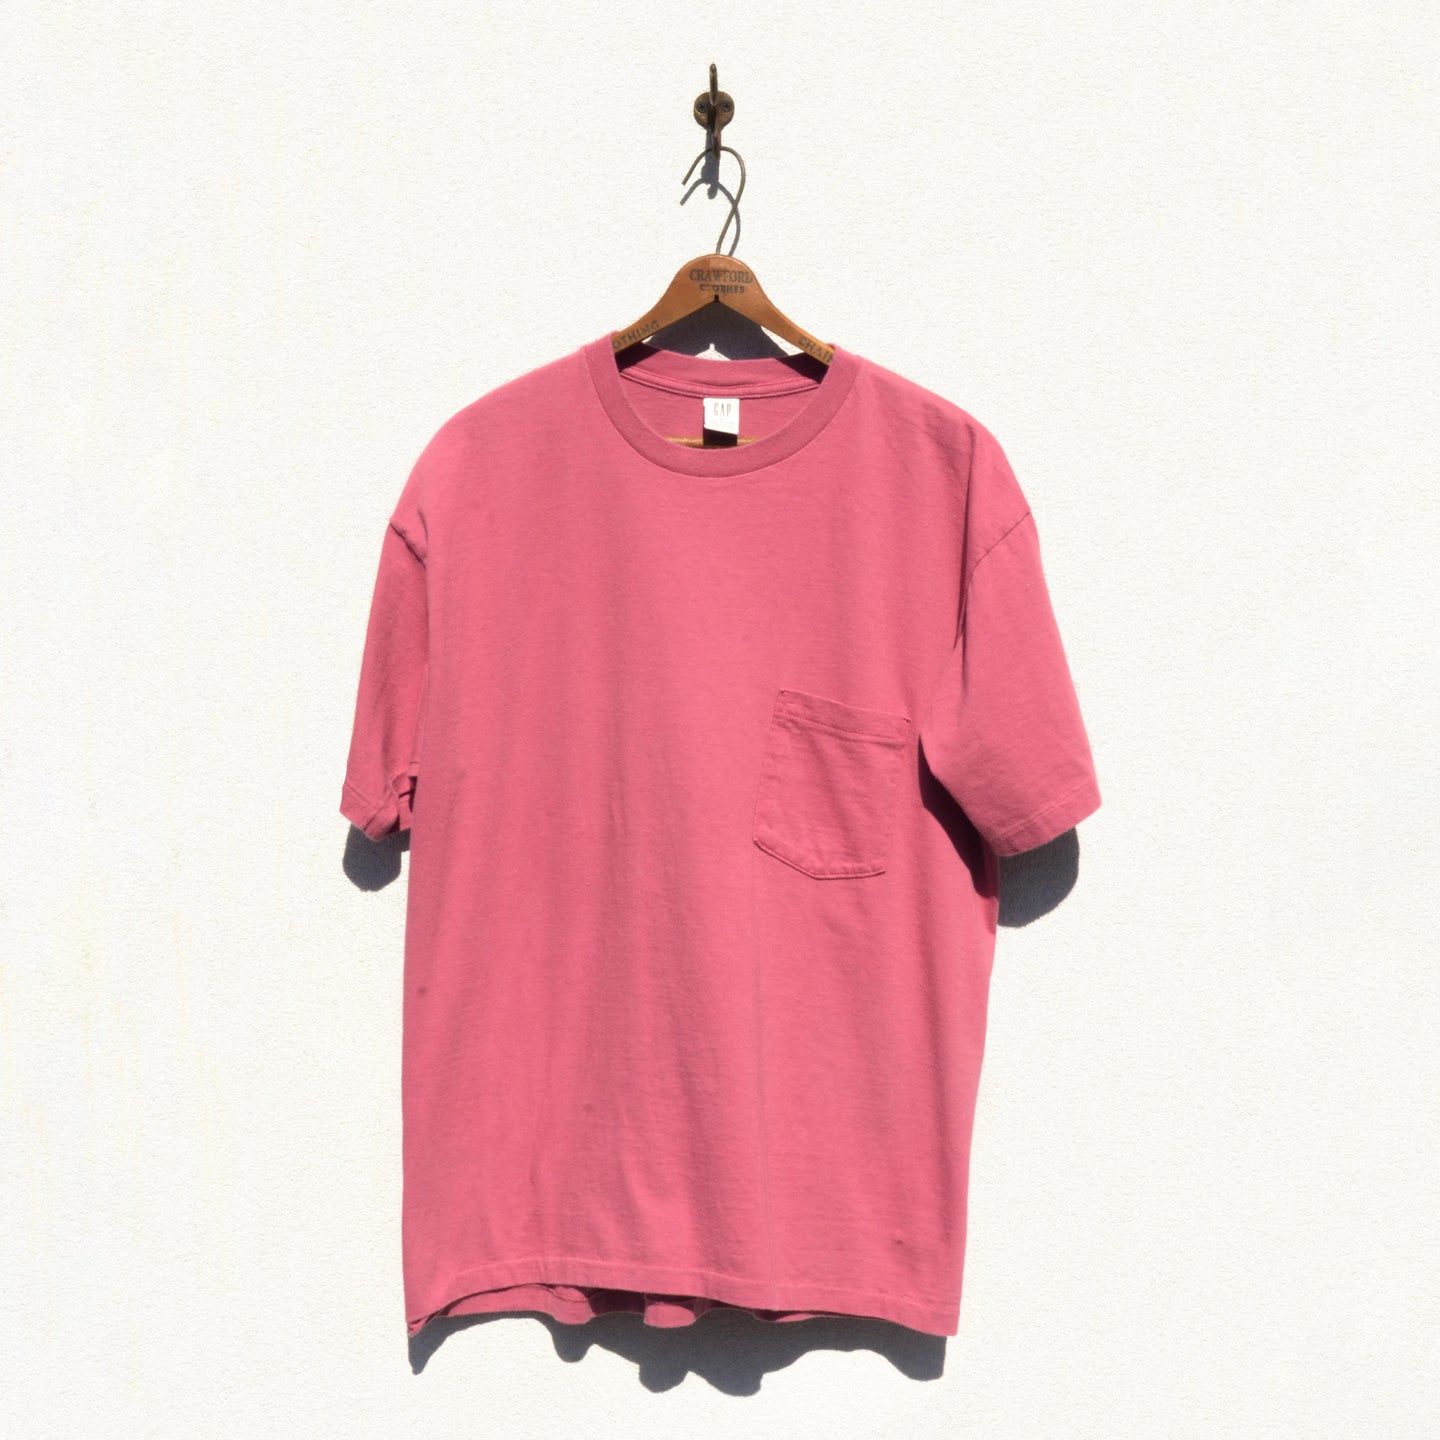 GAP - All Cotton Pocket T shirt